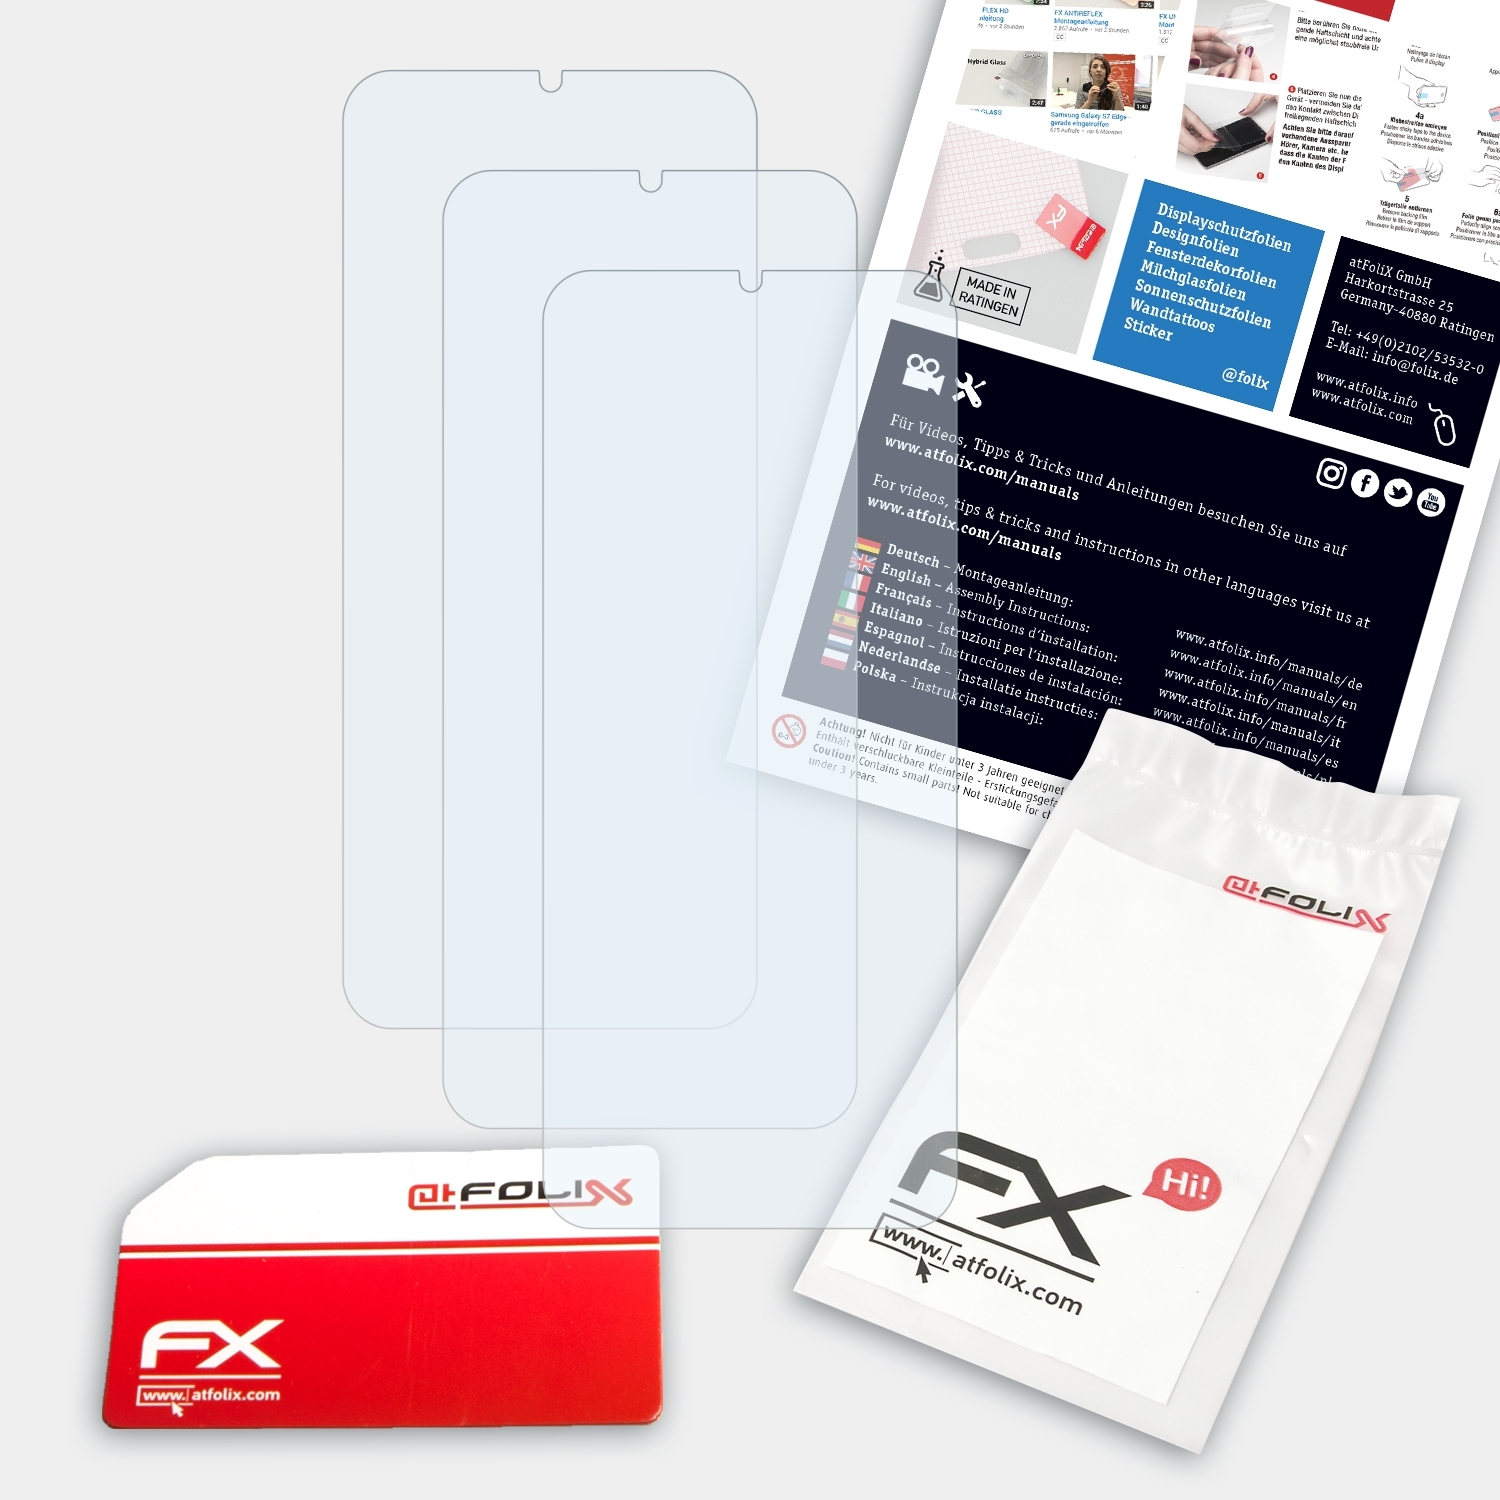 E7 Plus) Moto Motorola FX-Clear 3x ATFOLIX Displayschutz(für